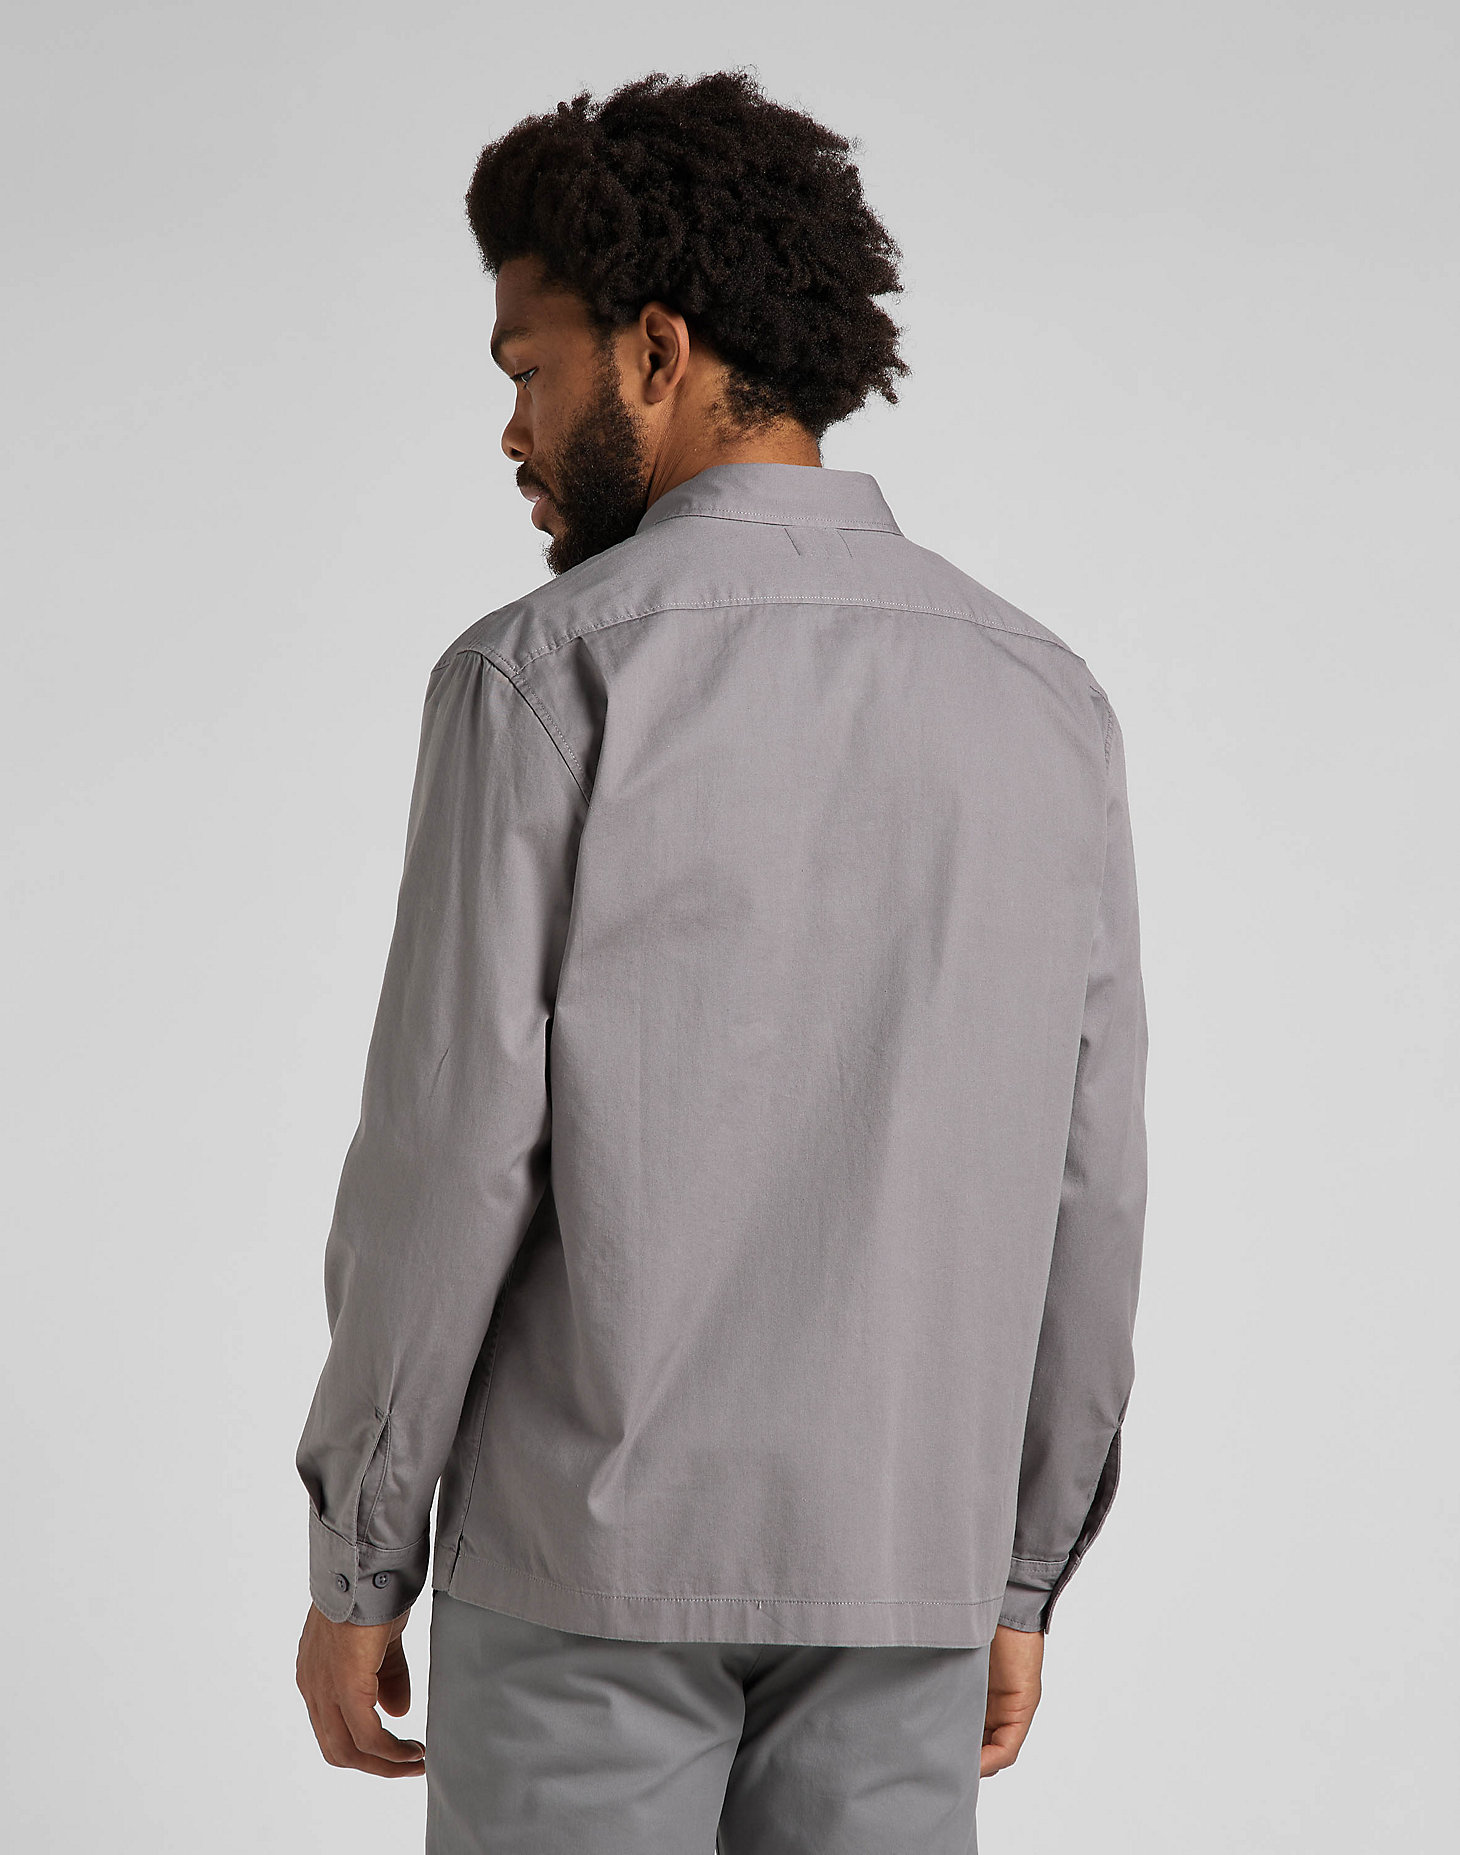 Chetopa Shirt in Steel Grey alternative view 1